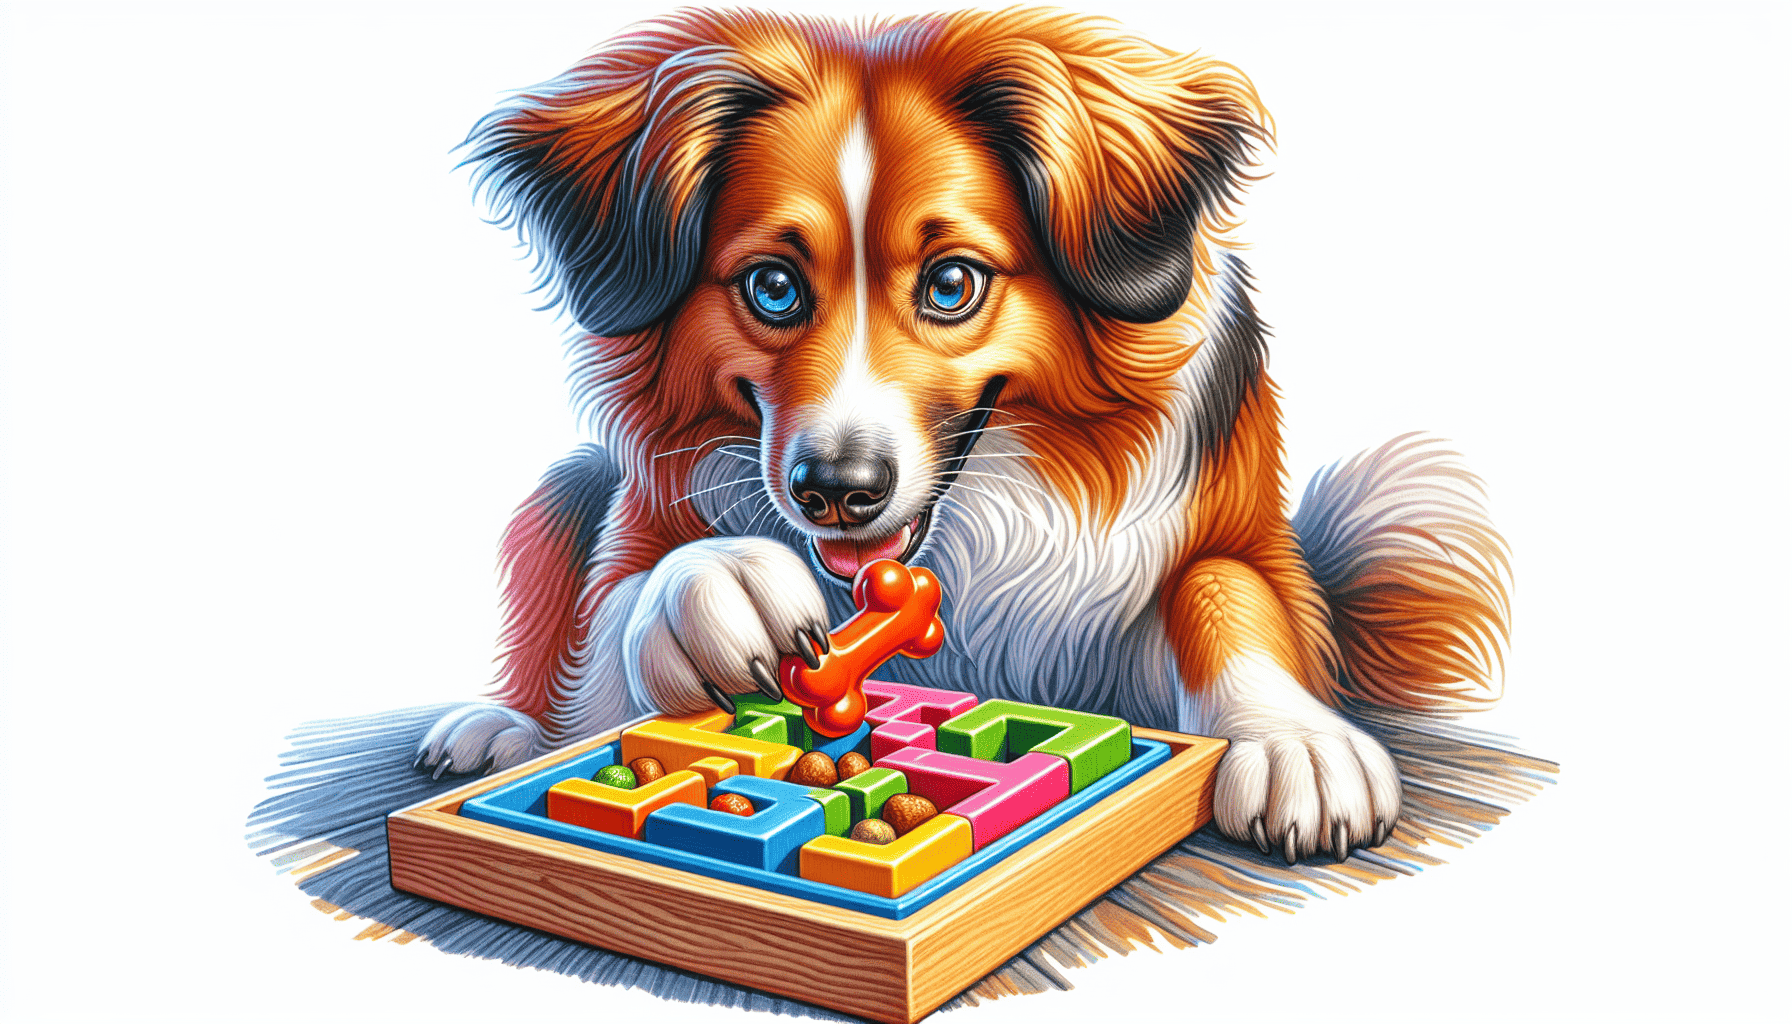 Illustration of a dog enjoying mental stimulation through a puzzle toy